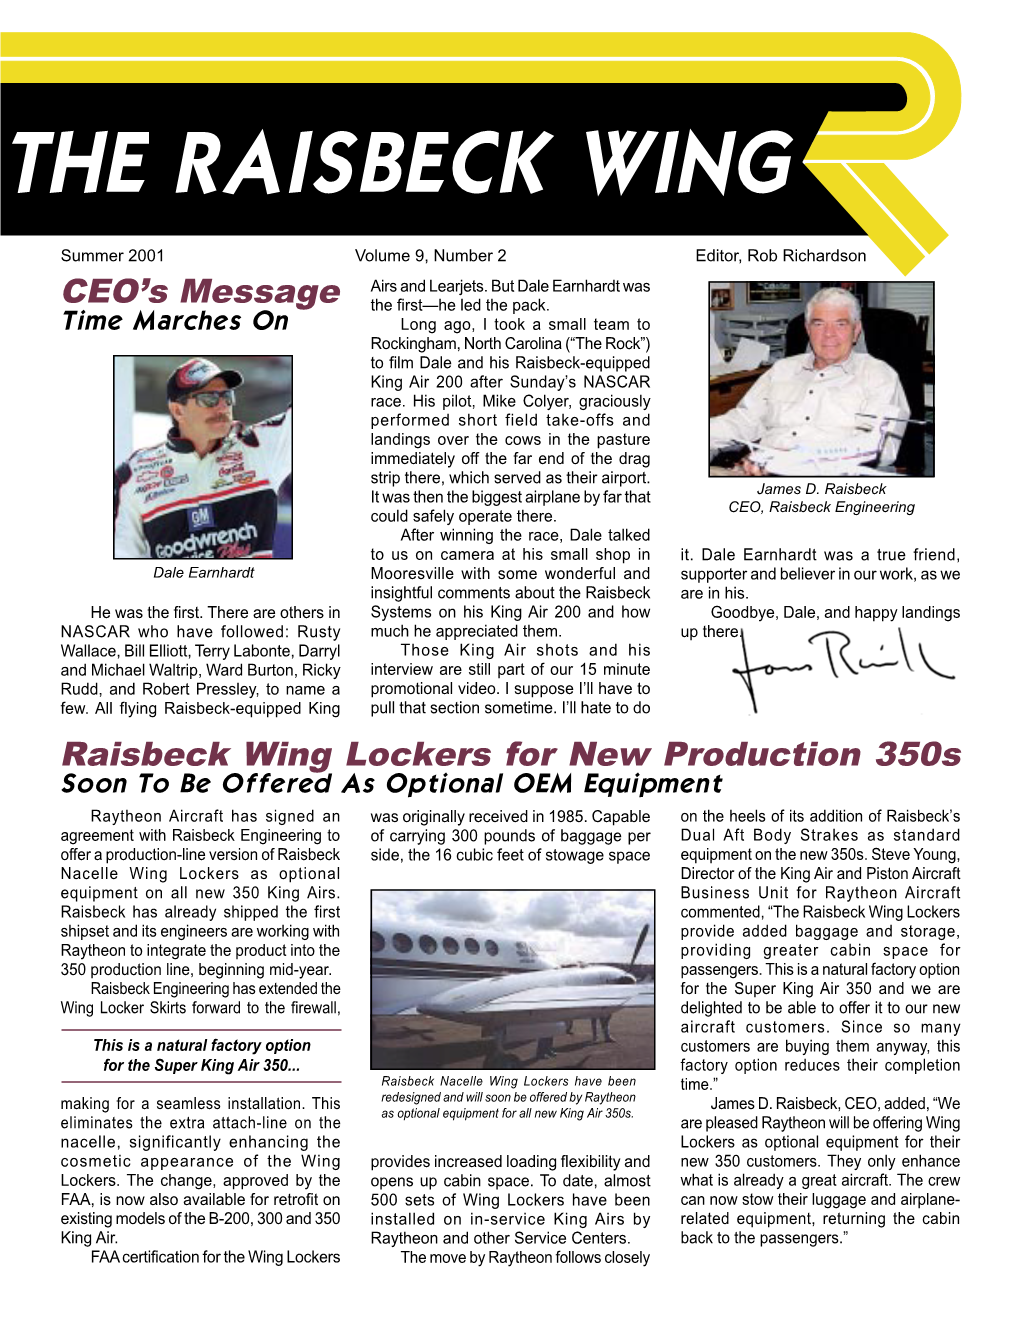 The Raisbeck Wing